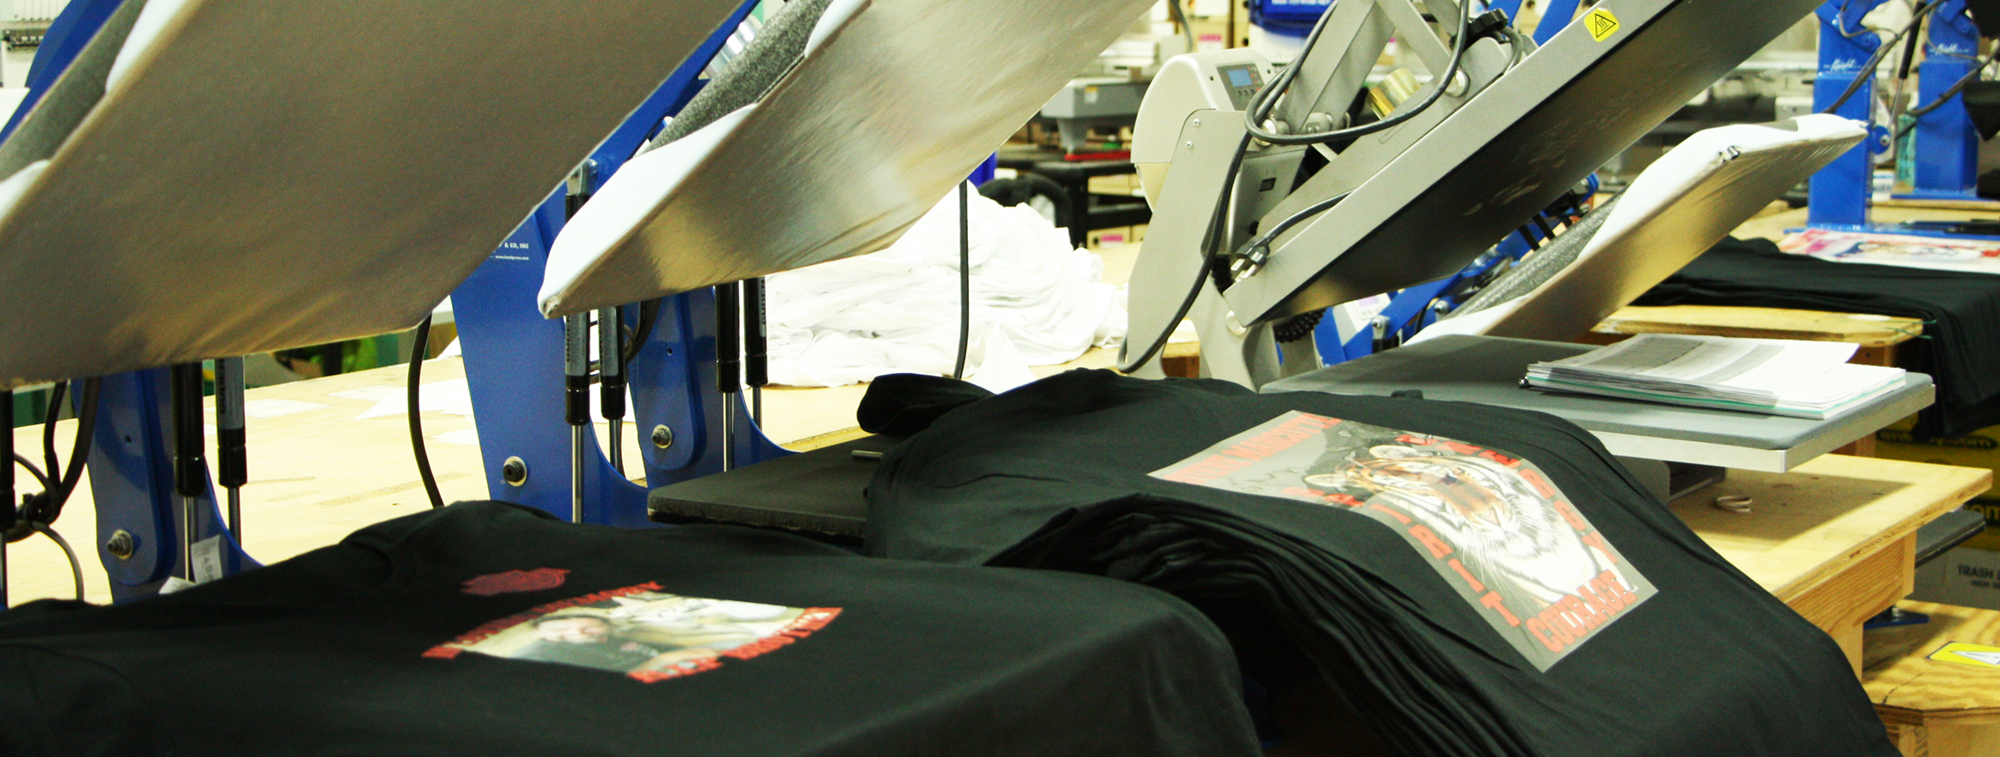 Savvy prints digital printing press heat pressing custom logos for client orders.